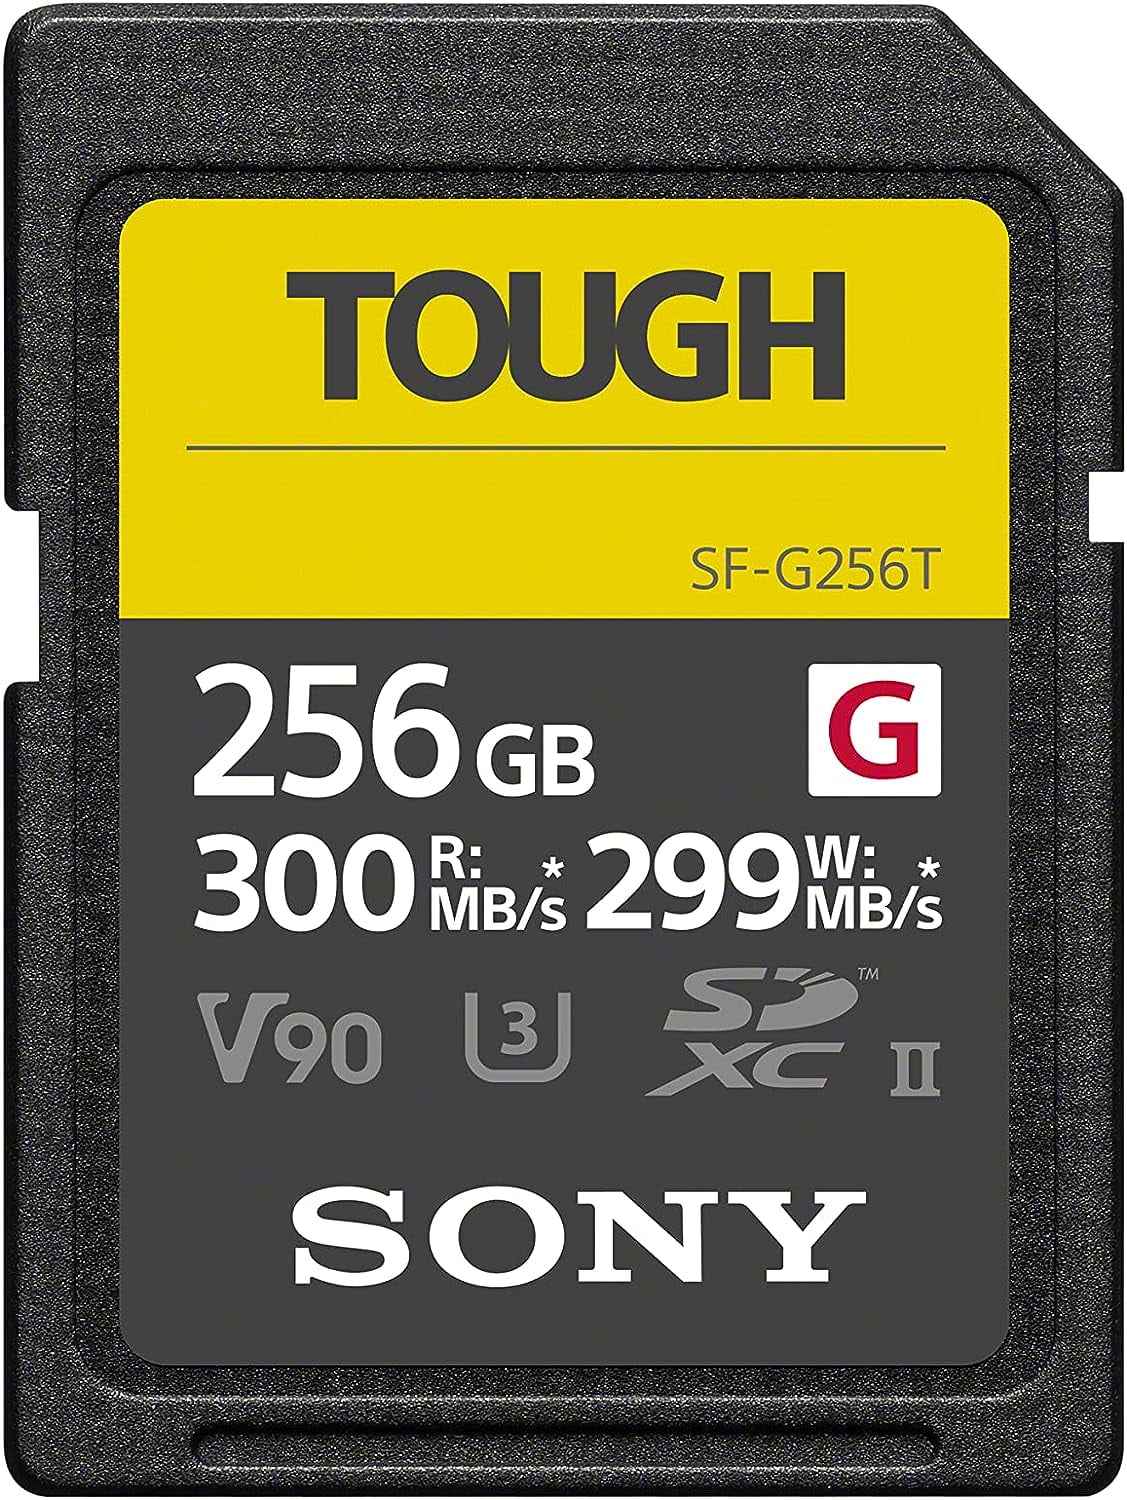 Sony Tough G Series SDXC UHS-II Memory Card 256GB - Walmart.com